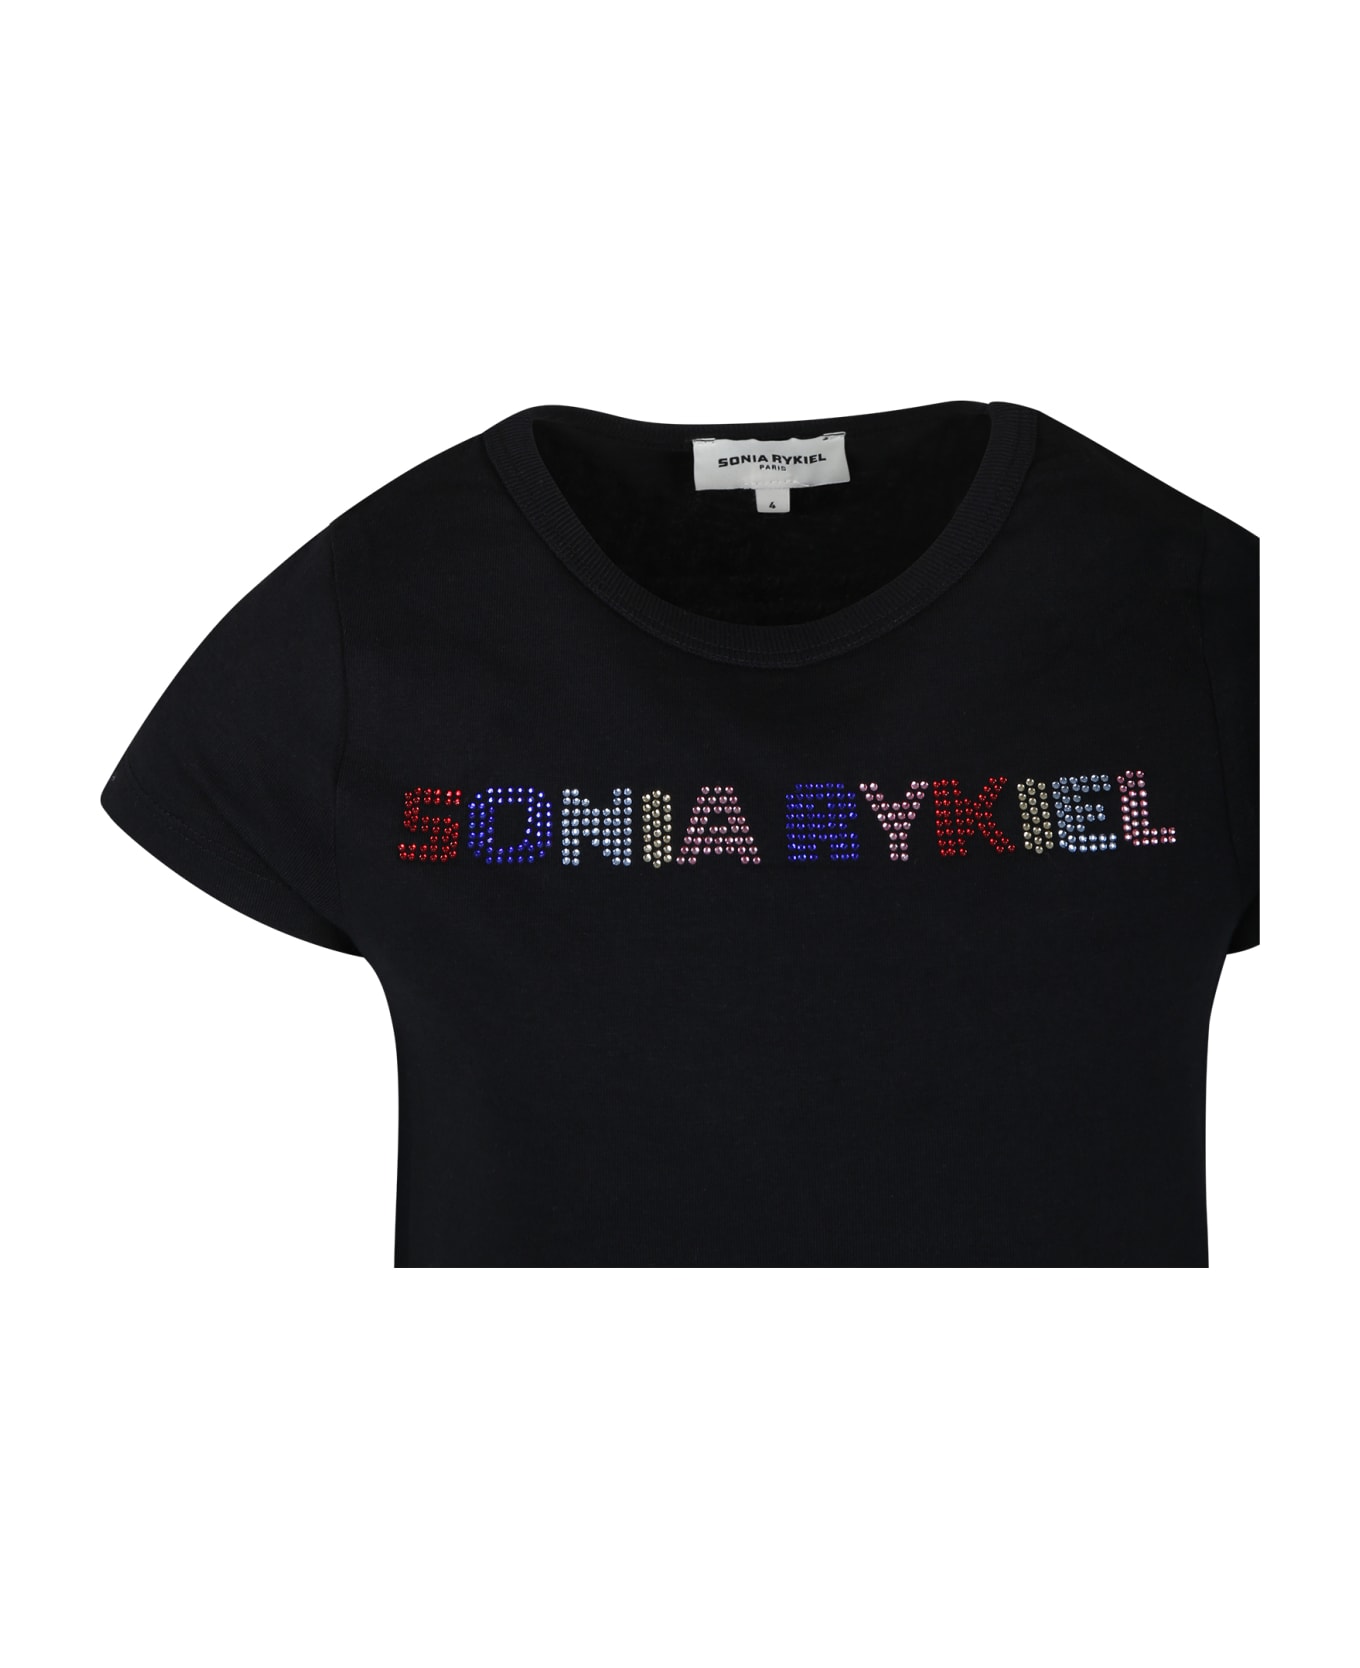 Rykiel Enfant Black T-shirt For Girl With Logo - Black